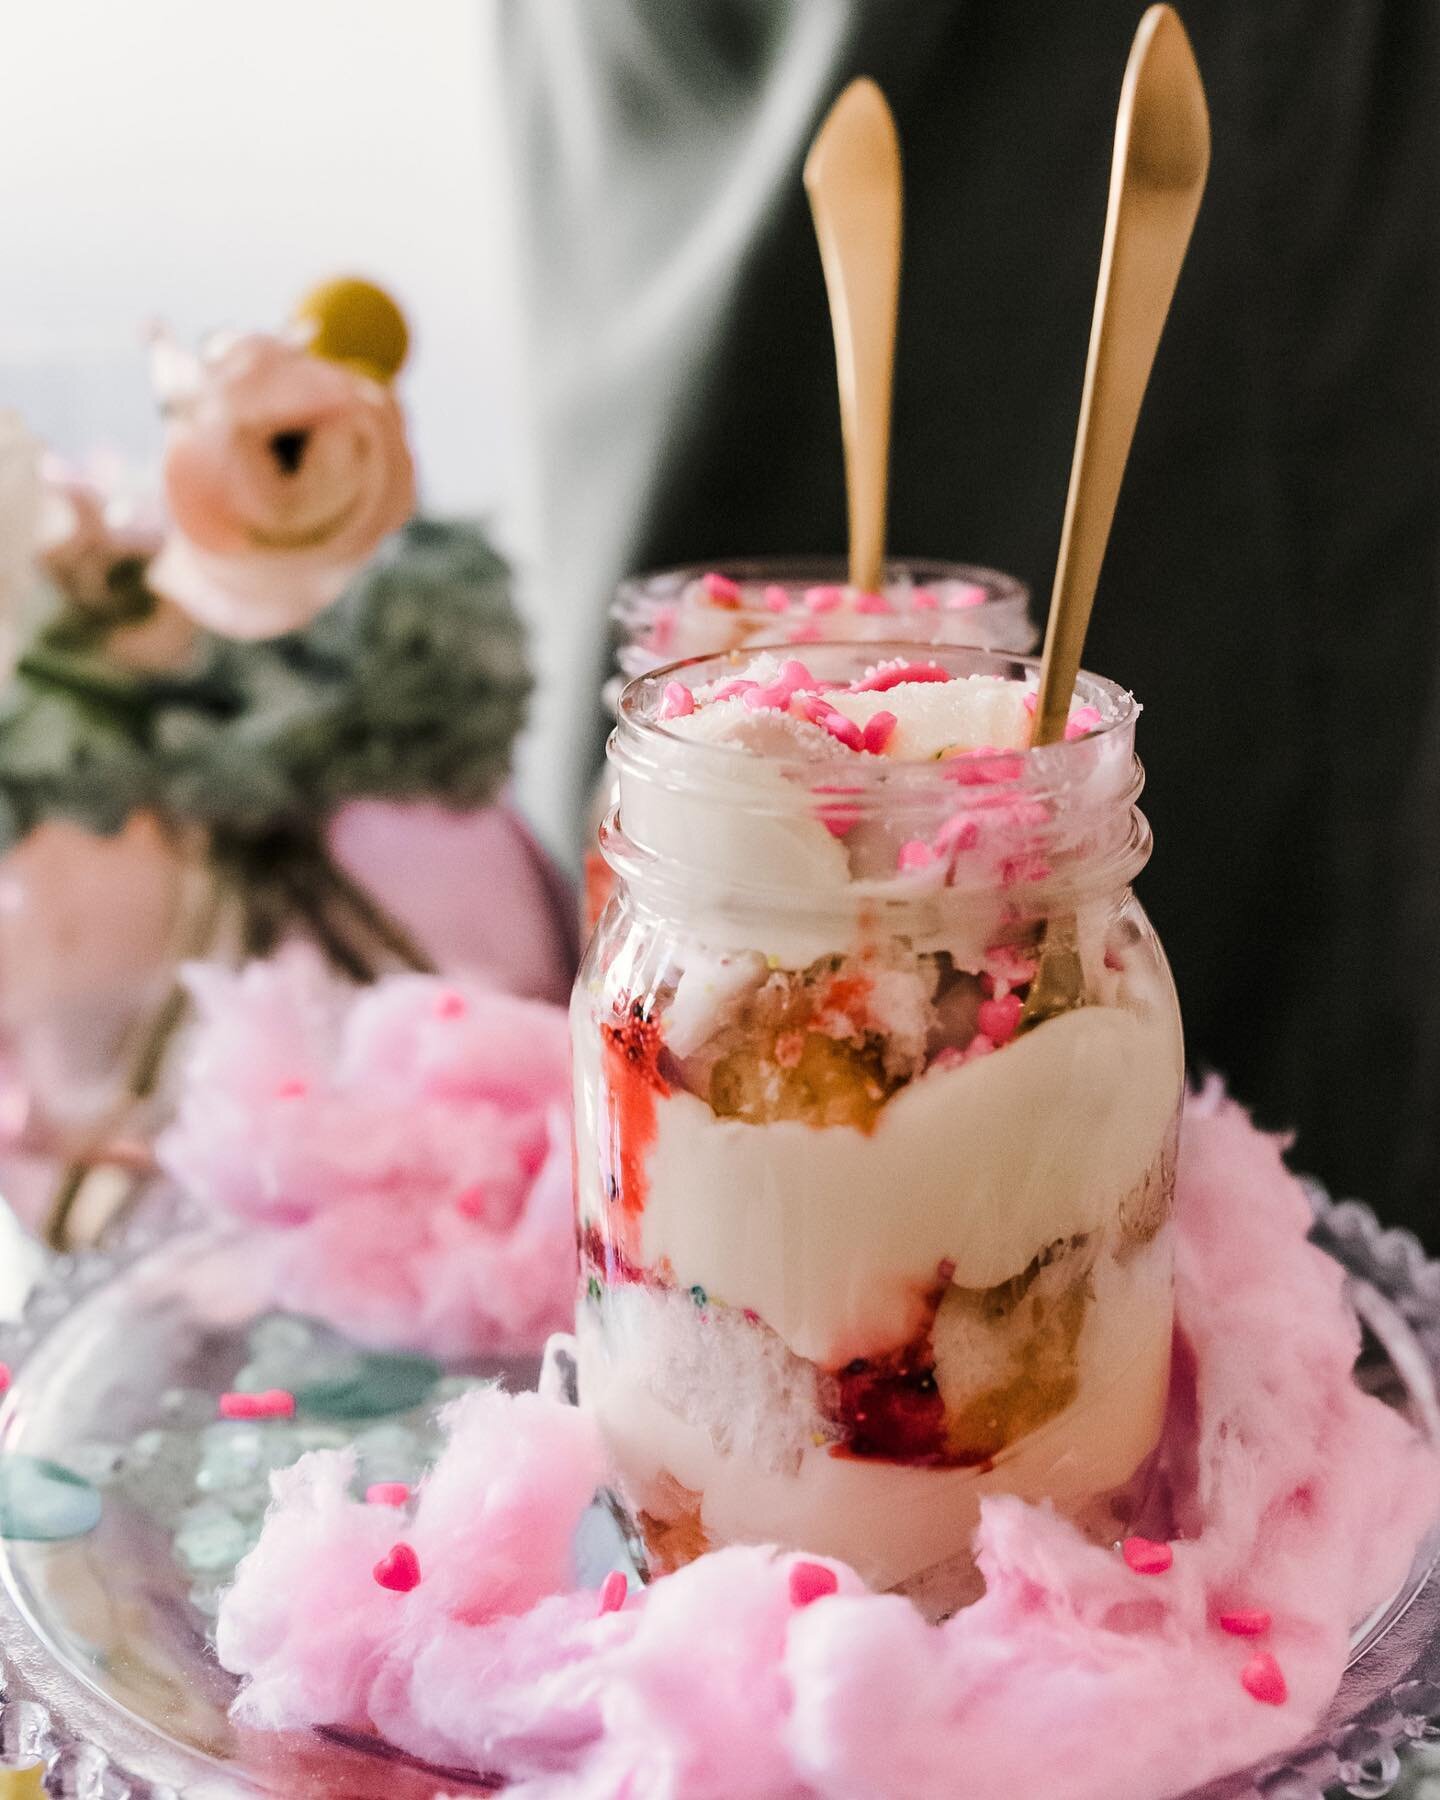 Cheesecake jars over wedding cake ~
would you? 🍰

Concept/Planning/Design @goodstockca
Concept/Photography @velvetinkphotography / @ames.img + @alexlubz
Desserts @houseoficecream_
Floral @jackiesflowers_
Hair @jenakinghair 
MUA @josannamua
Invitatio